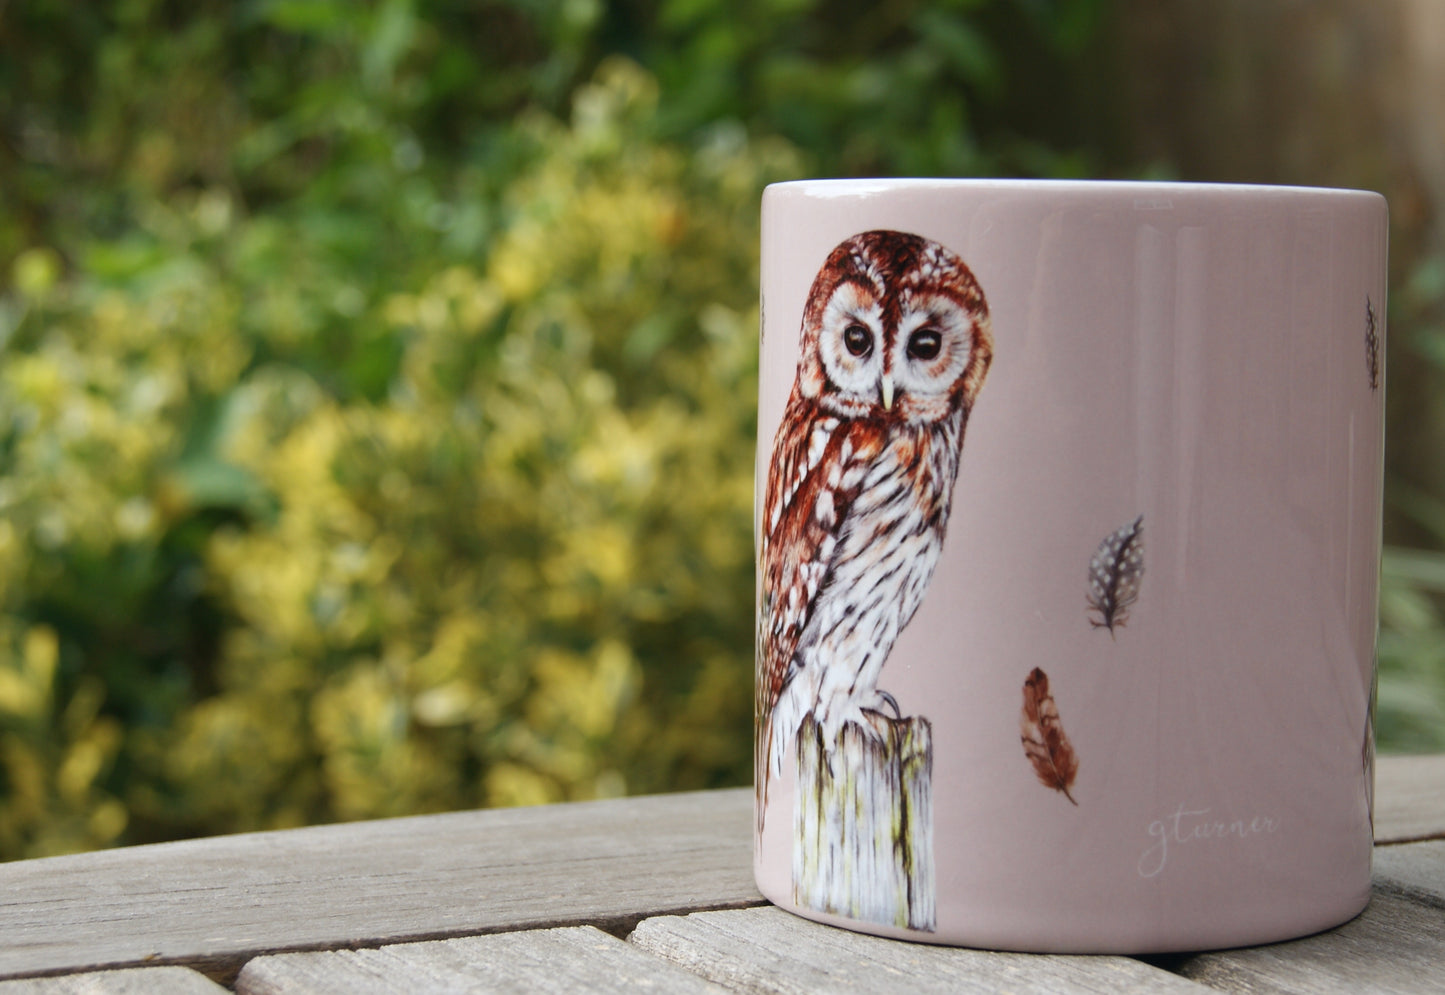 Tawny Owl Ceramic Mug